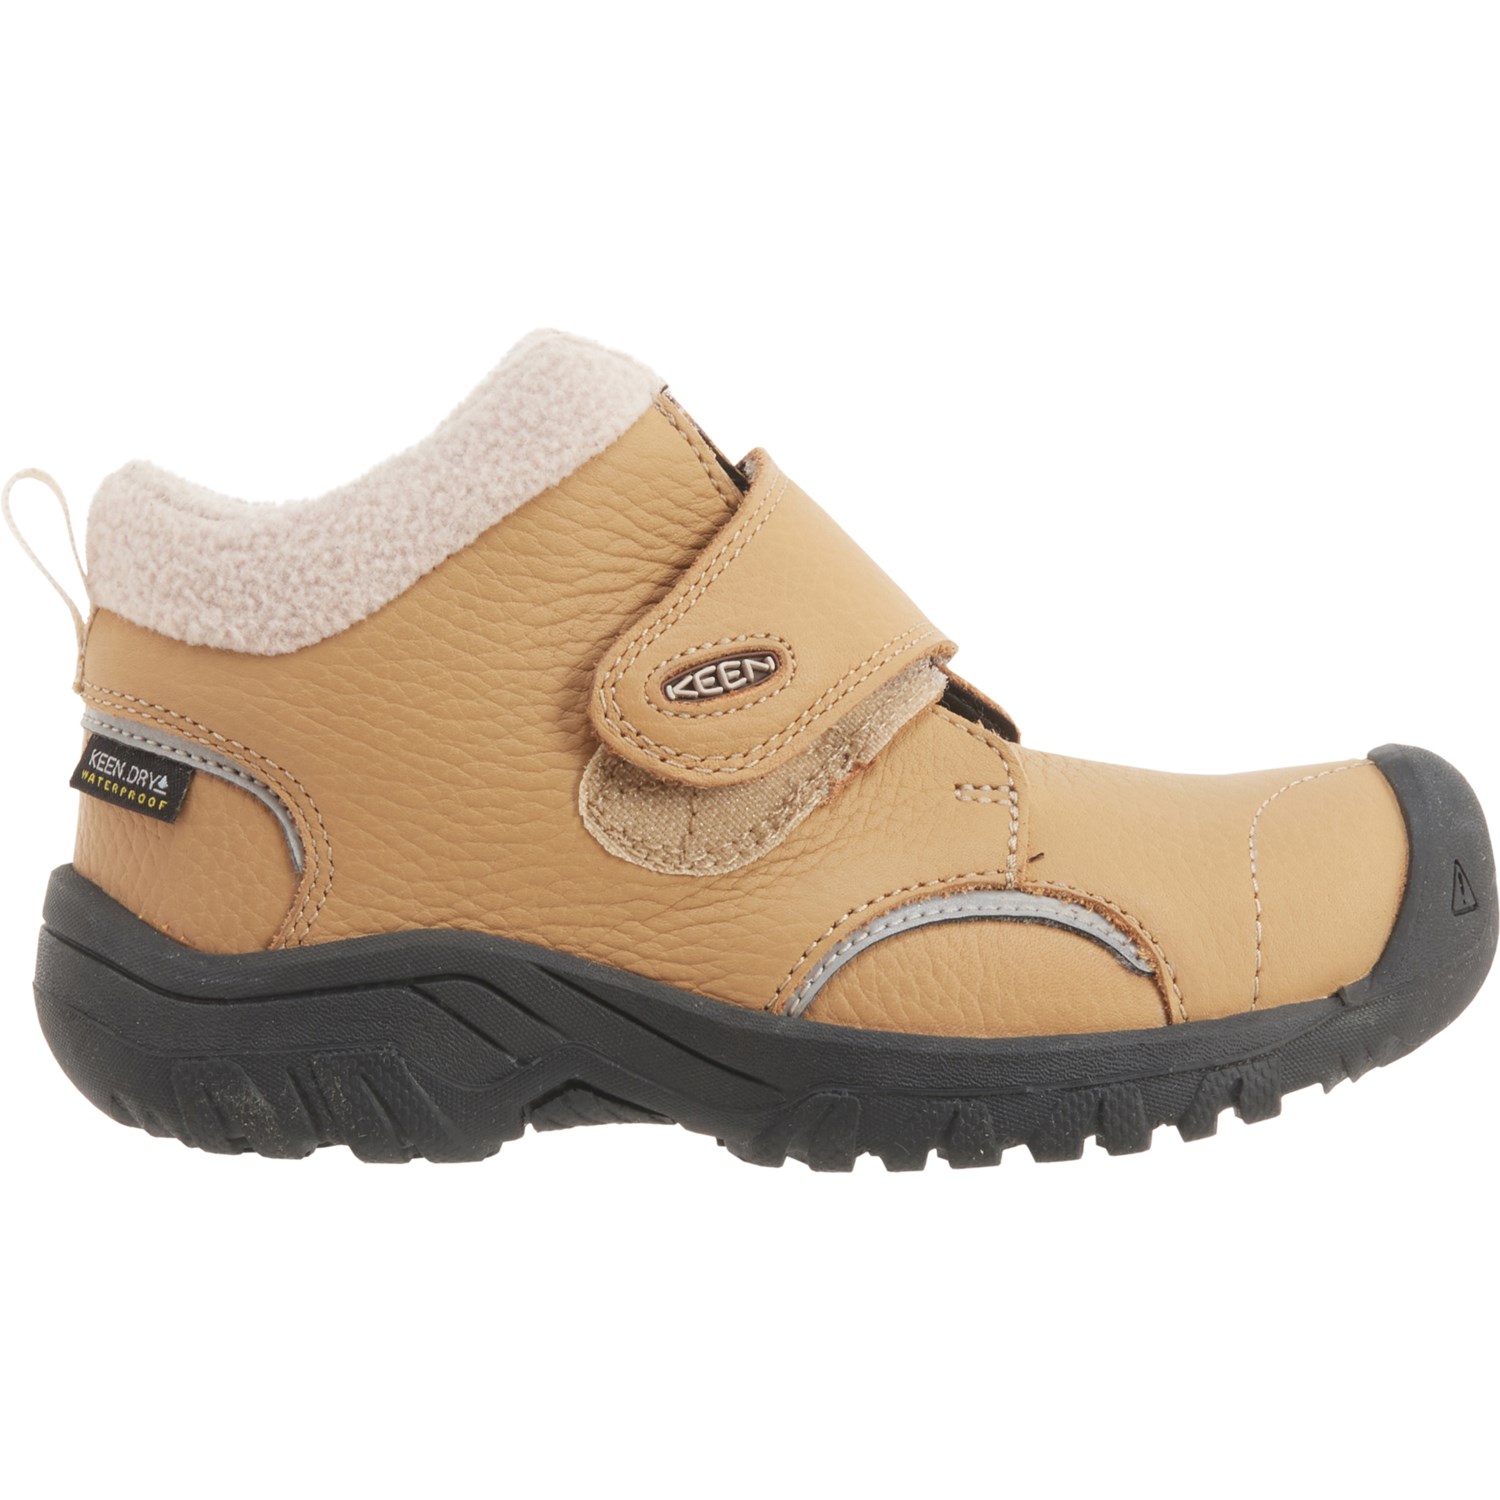 Keen Boys Kids Sandals Outdoor Waterproof Hiking shoes sz 4